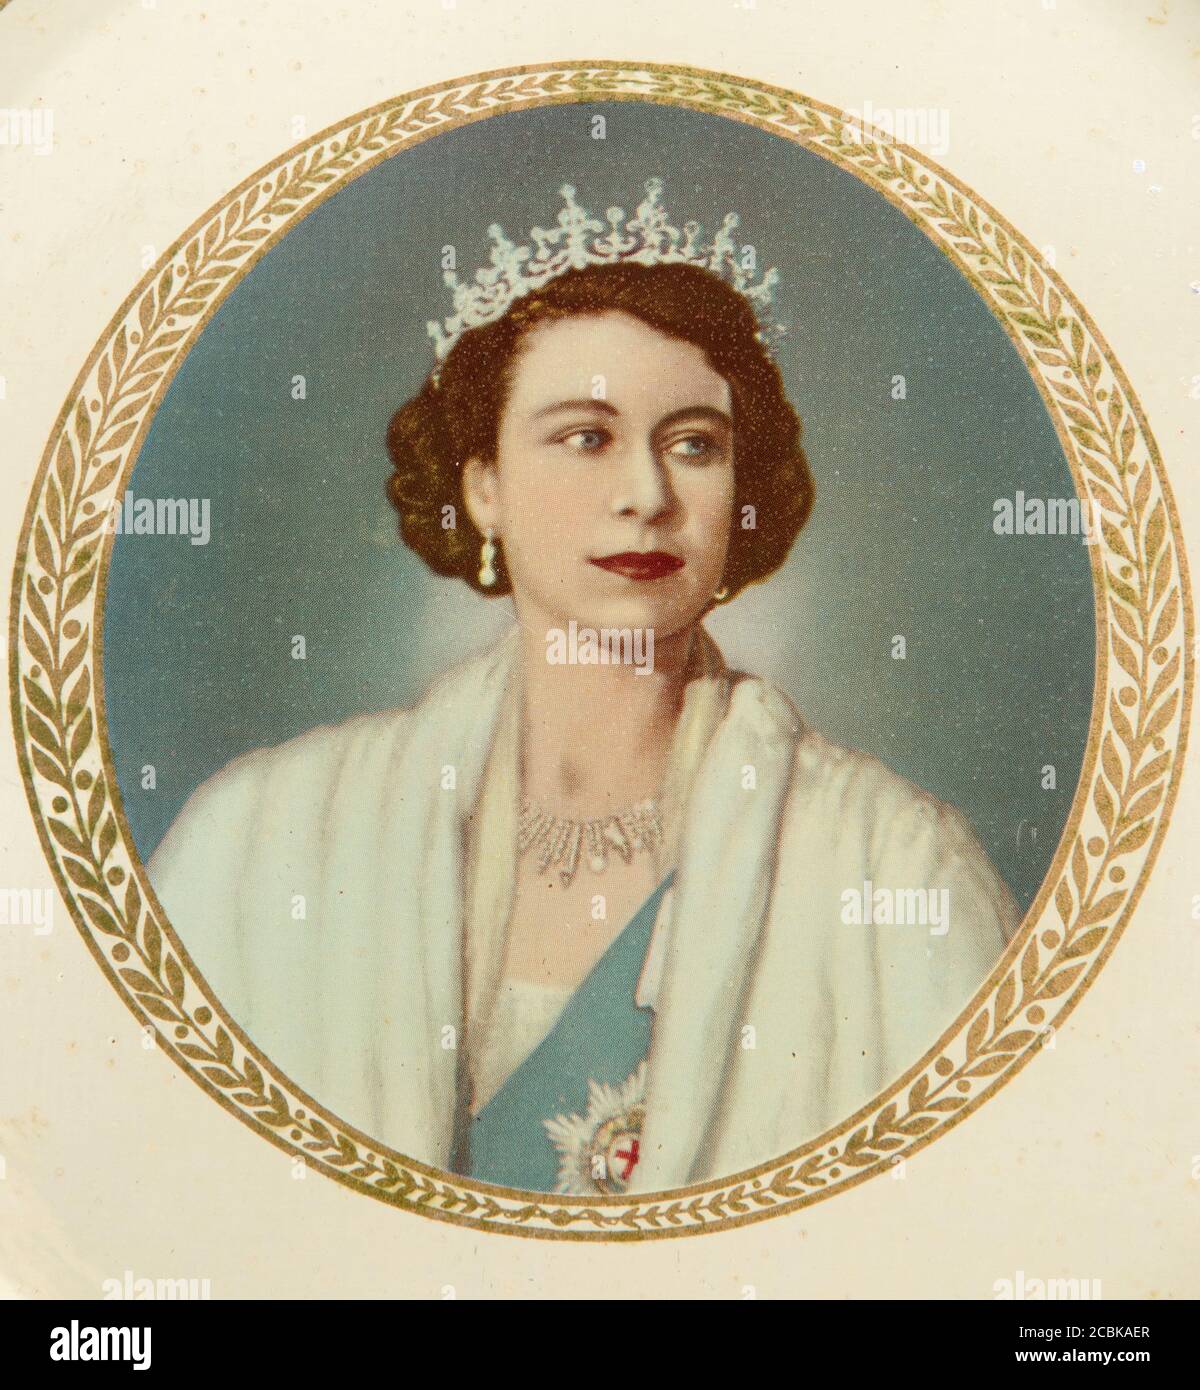 La regina Elisabetta II Coronation 2 giugno 1953 ritratto su un souvenir vintage Portland Ware Tin Plate. La giovane regina Elisabetta OMERO SYKES Foto Stock